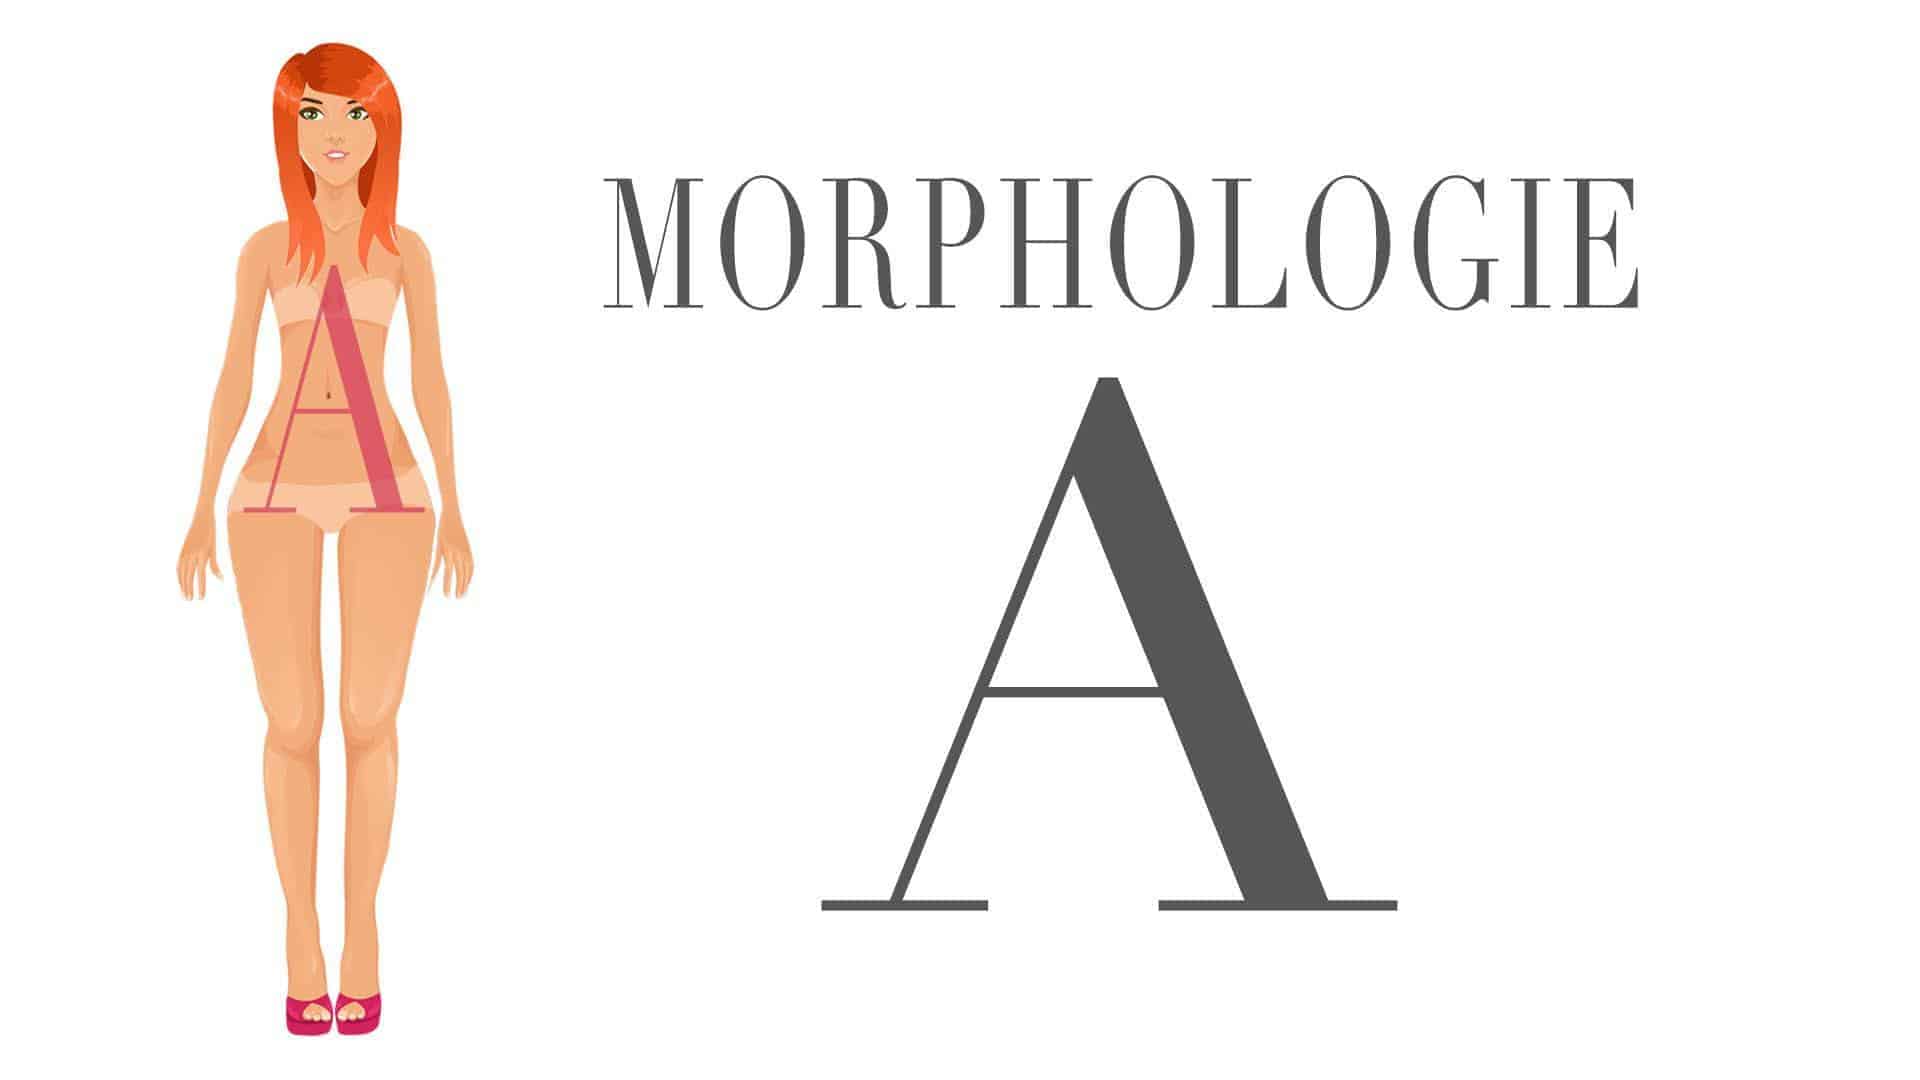 Morphologie en A ou pyramide : comment s'habiller ?